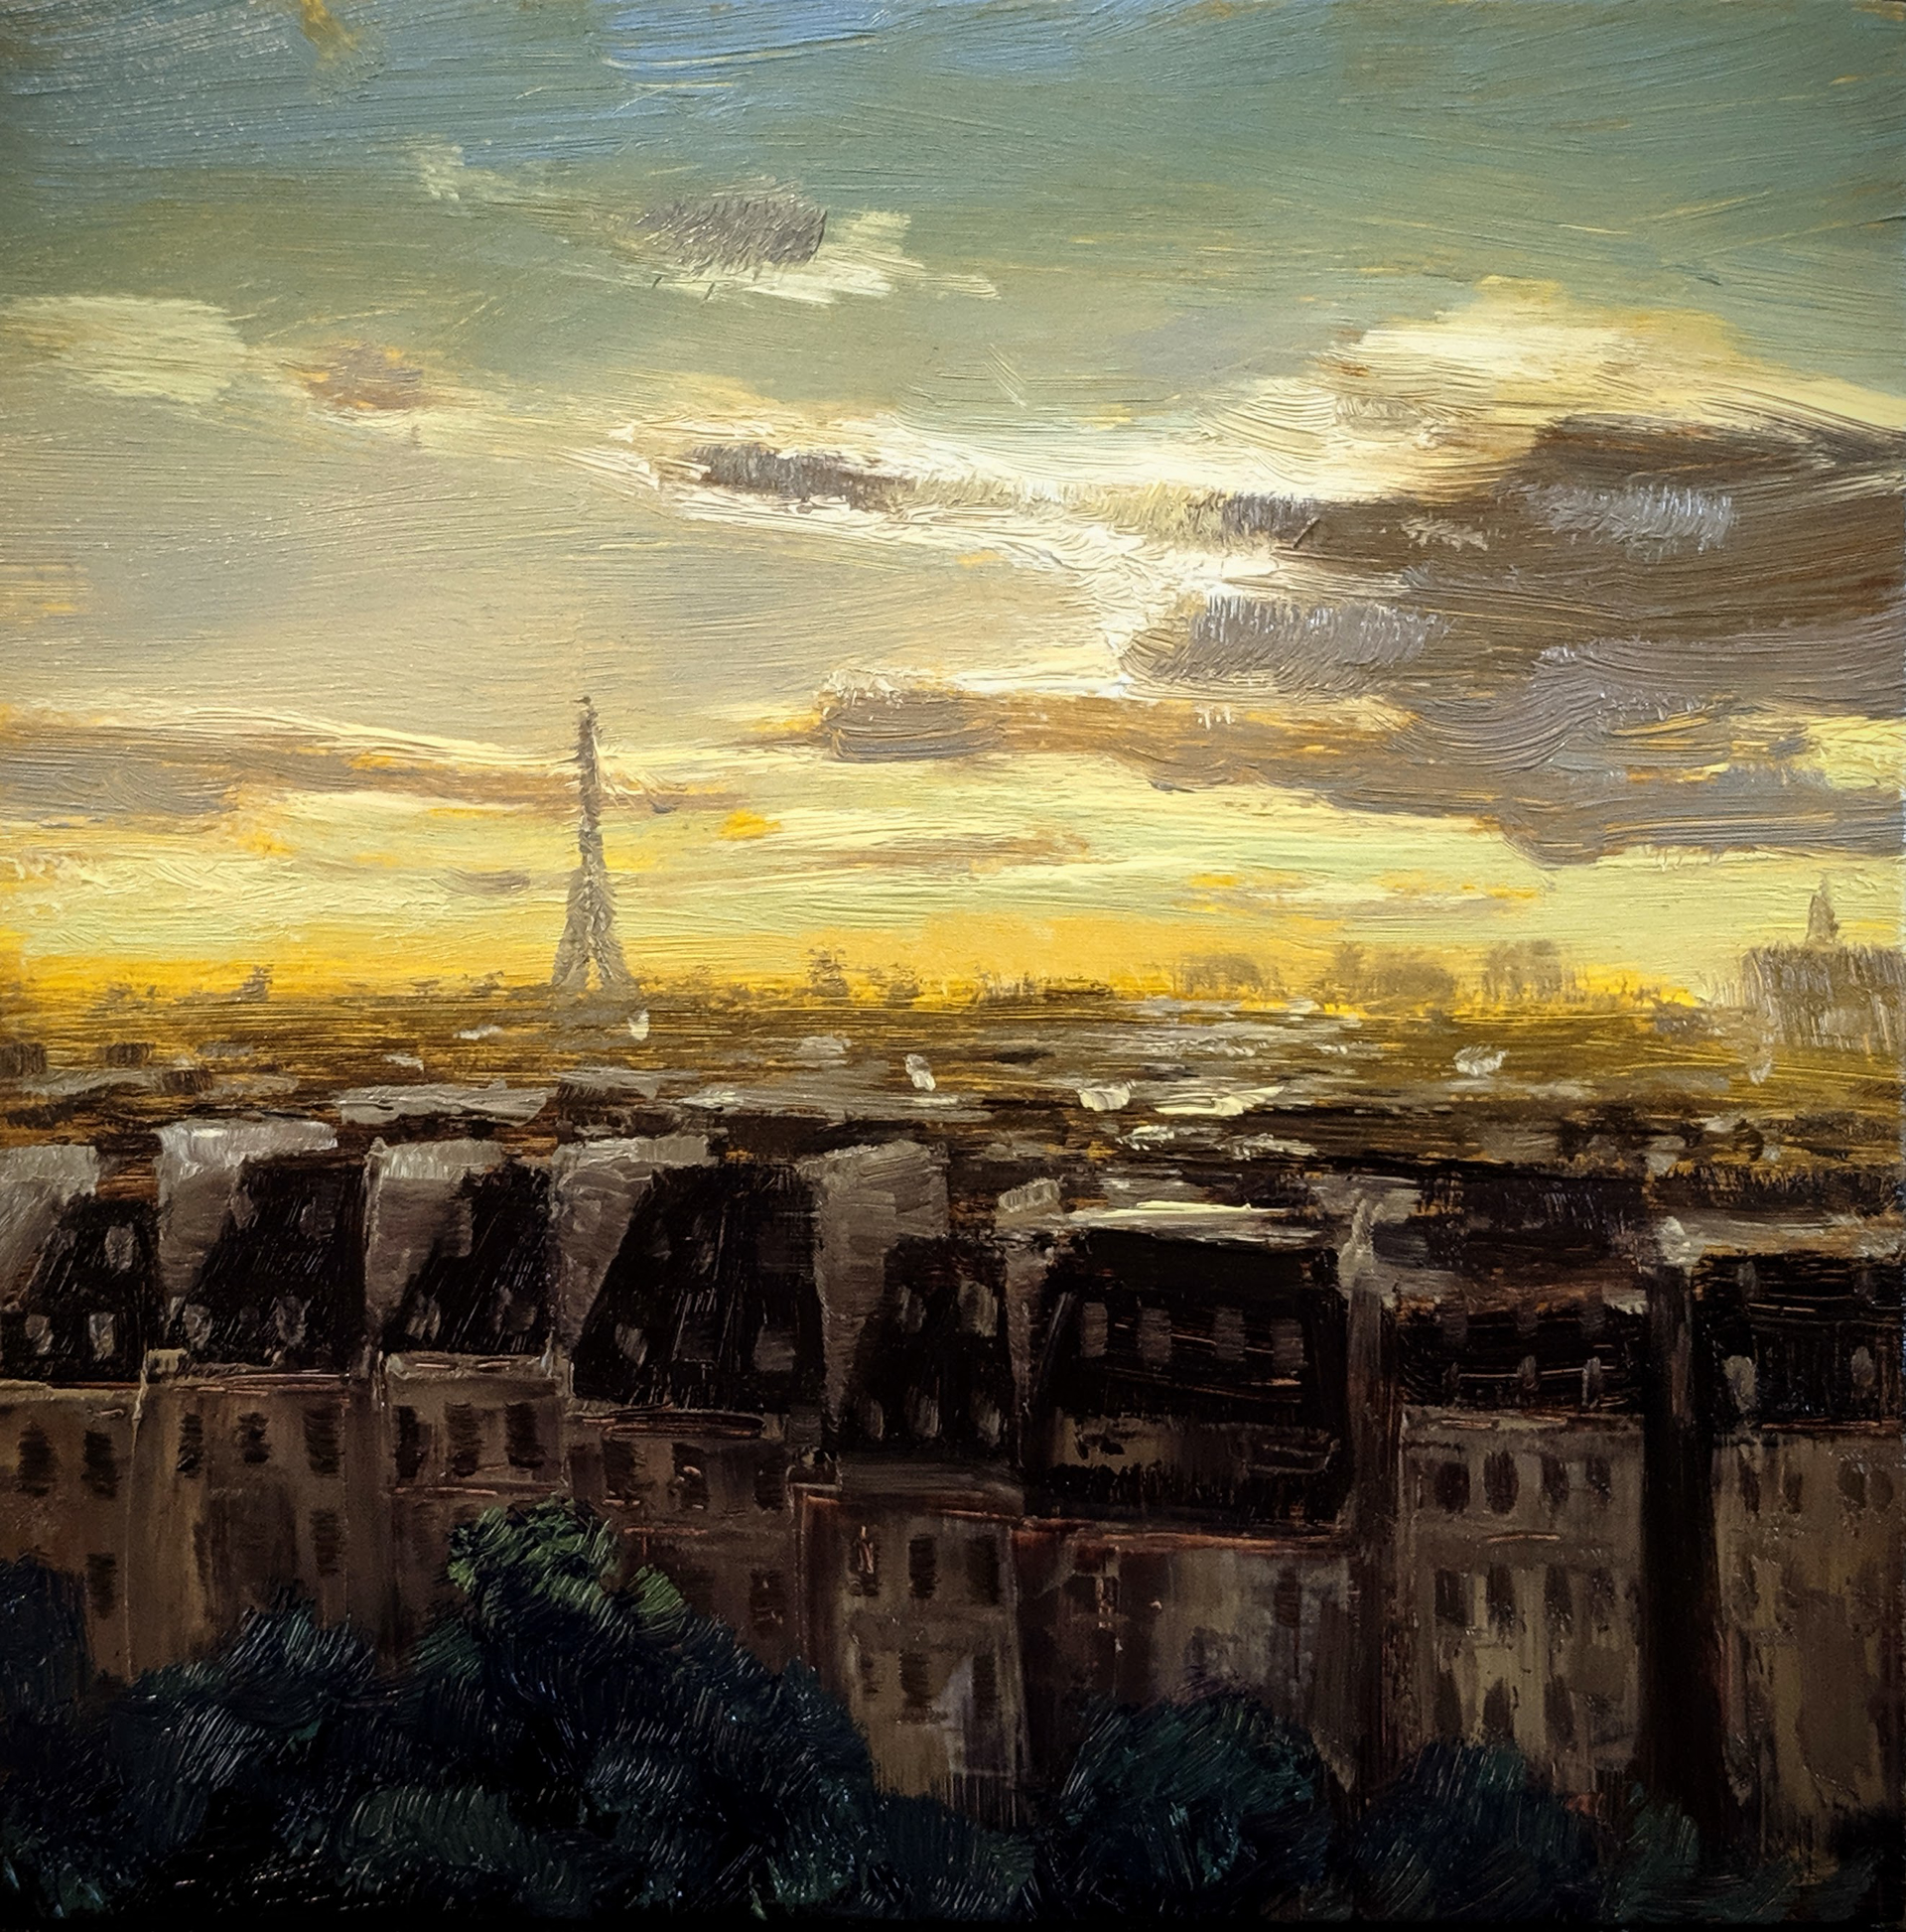 Story of Paris, Vol I, No. 7 by Christopher Clark